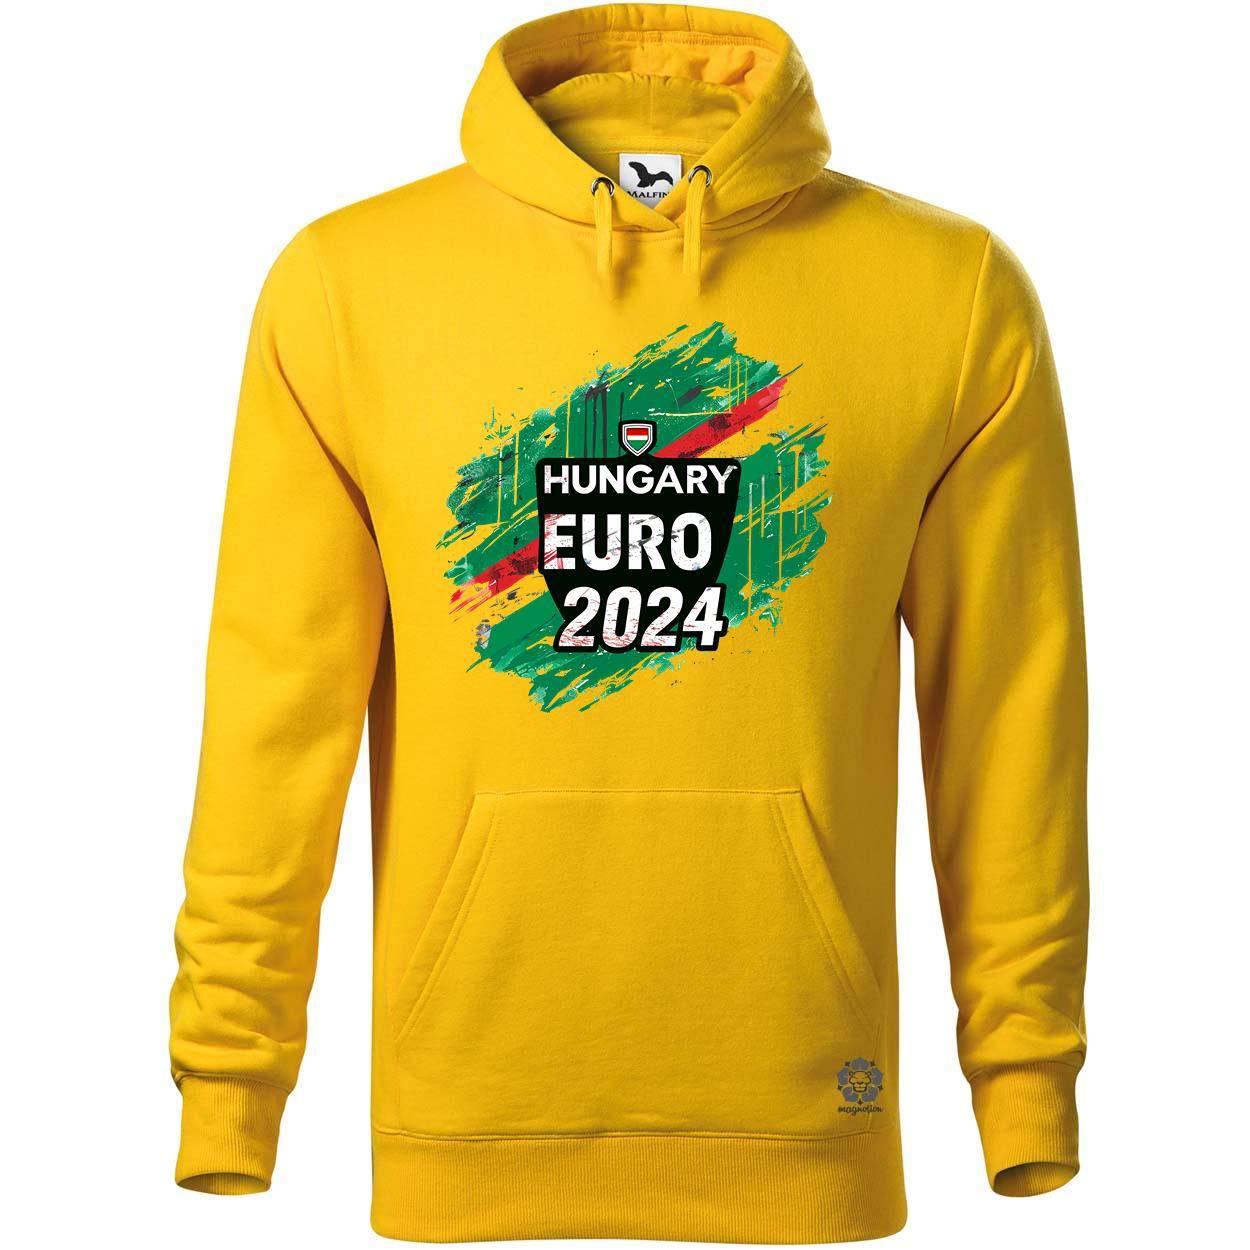 Hungary Euro 2024 v2